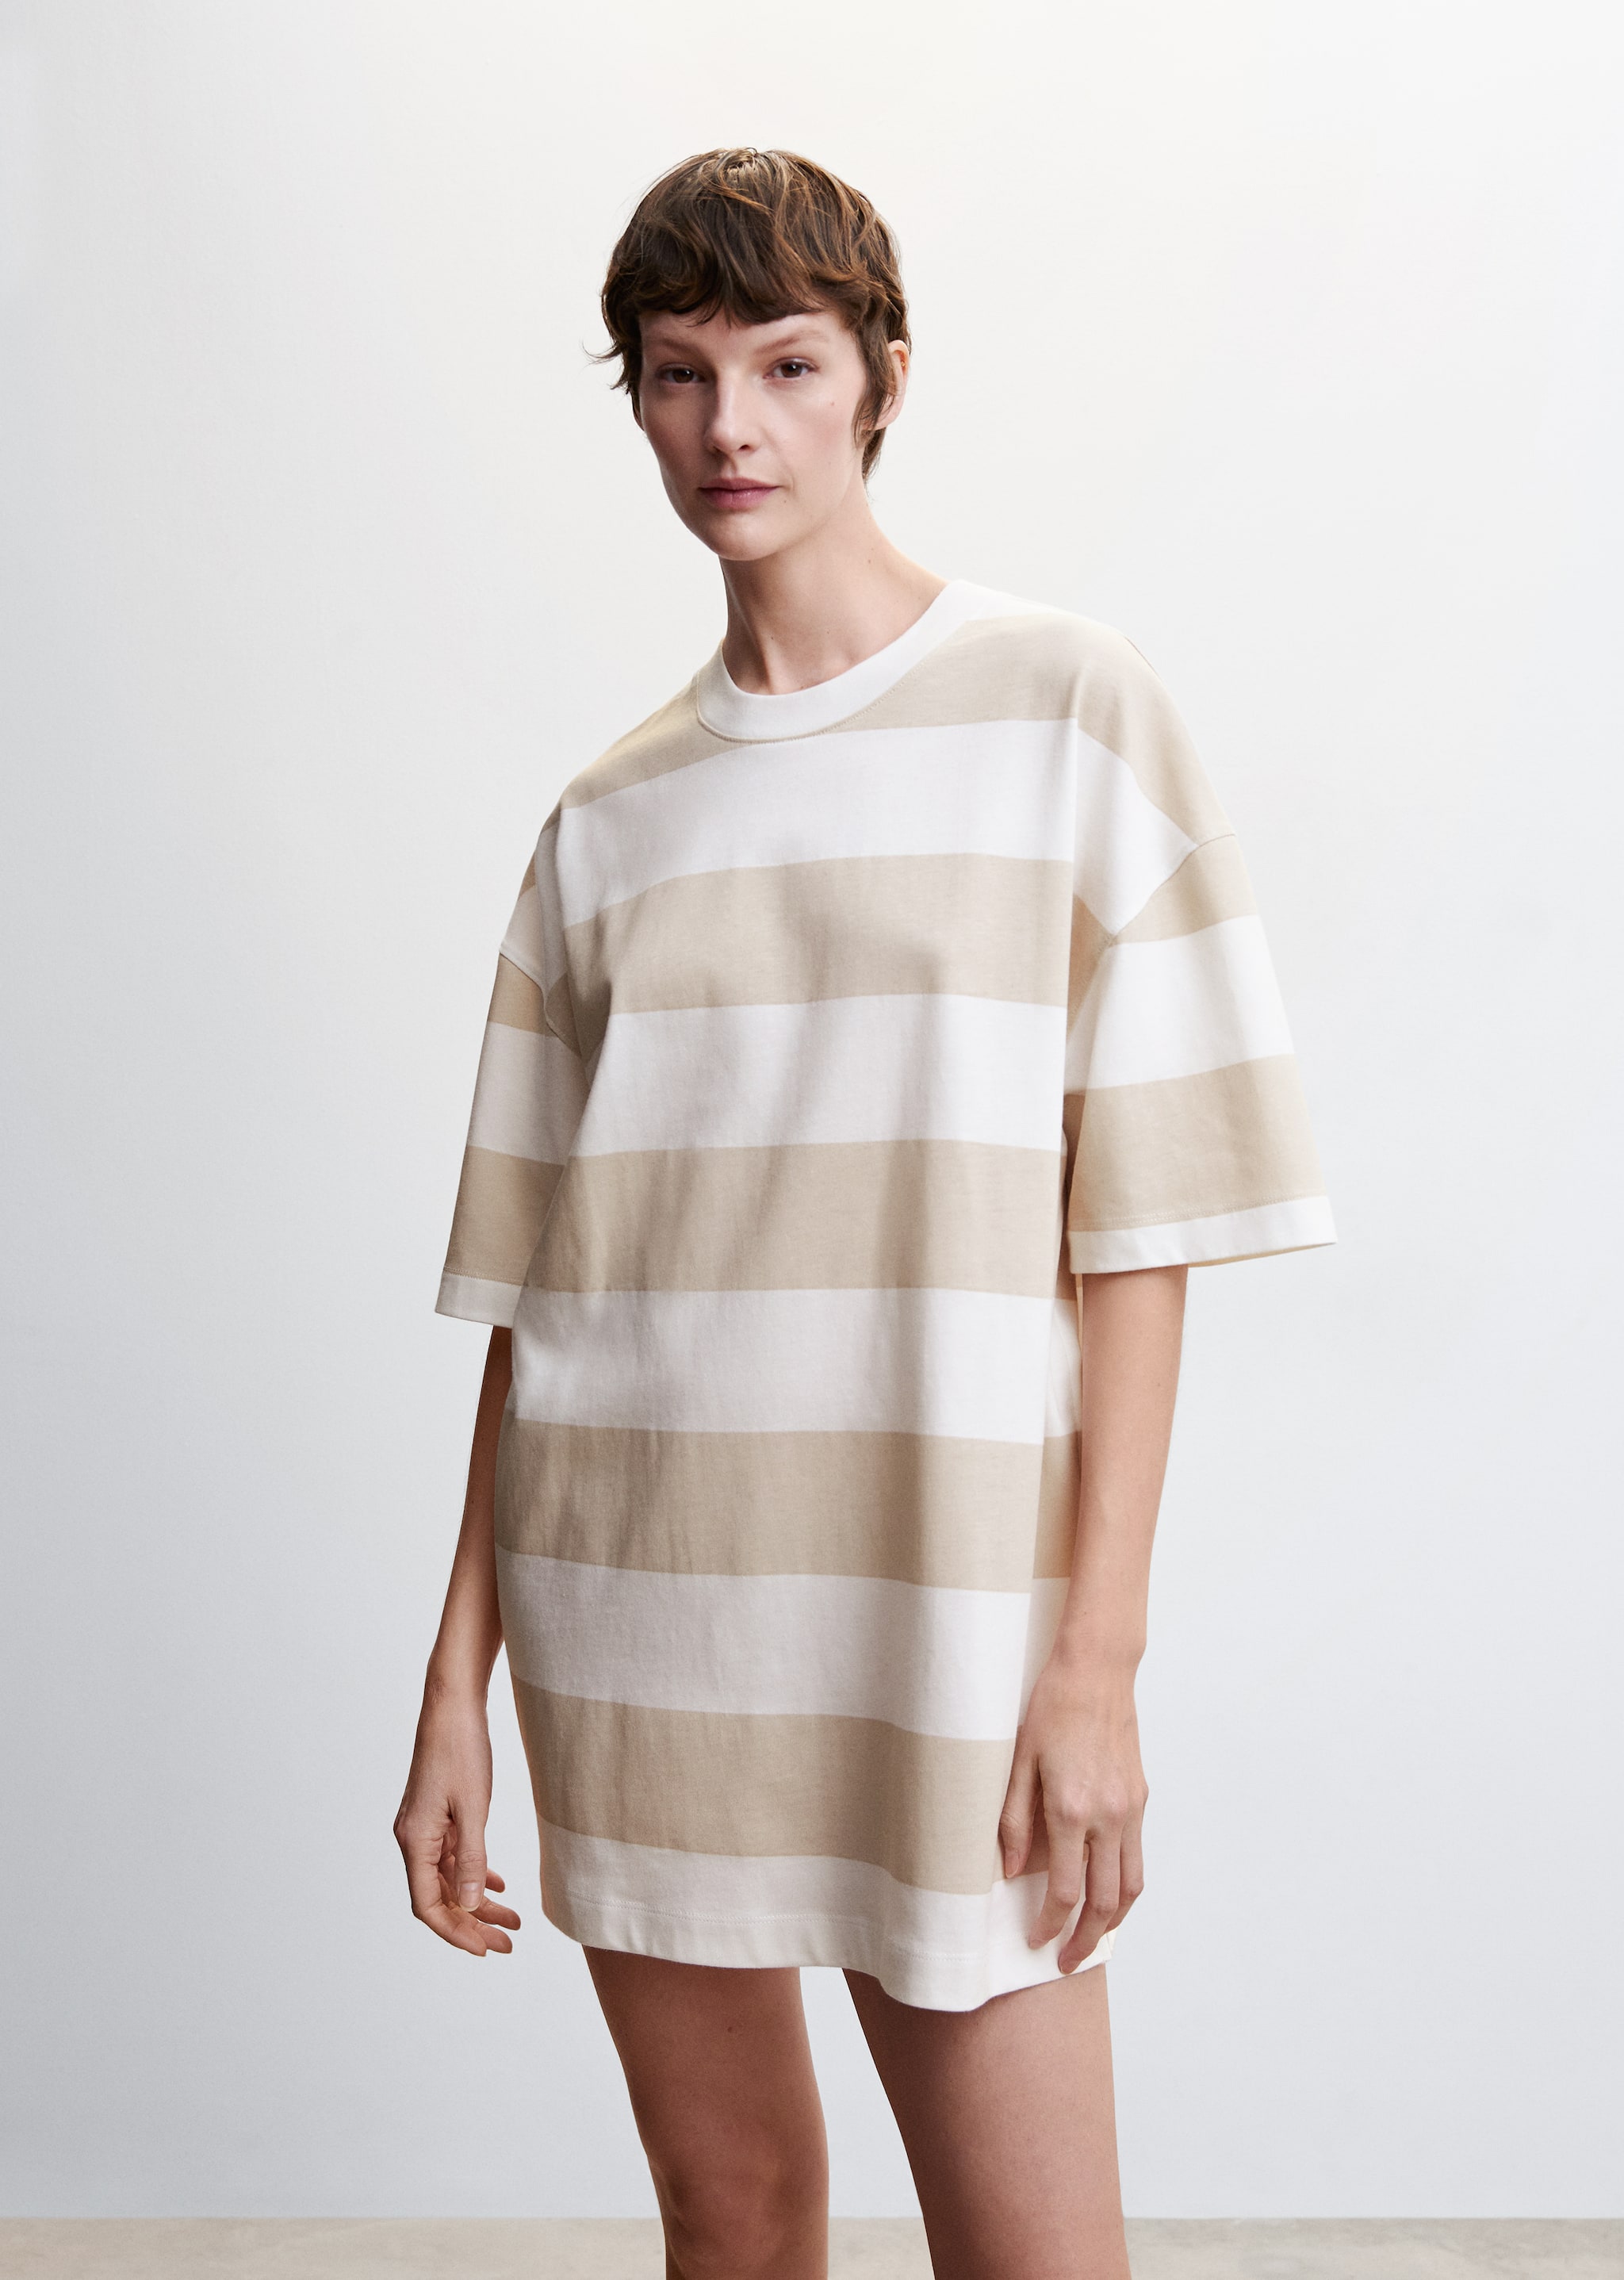  Striped cotton camisole - Medium plane